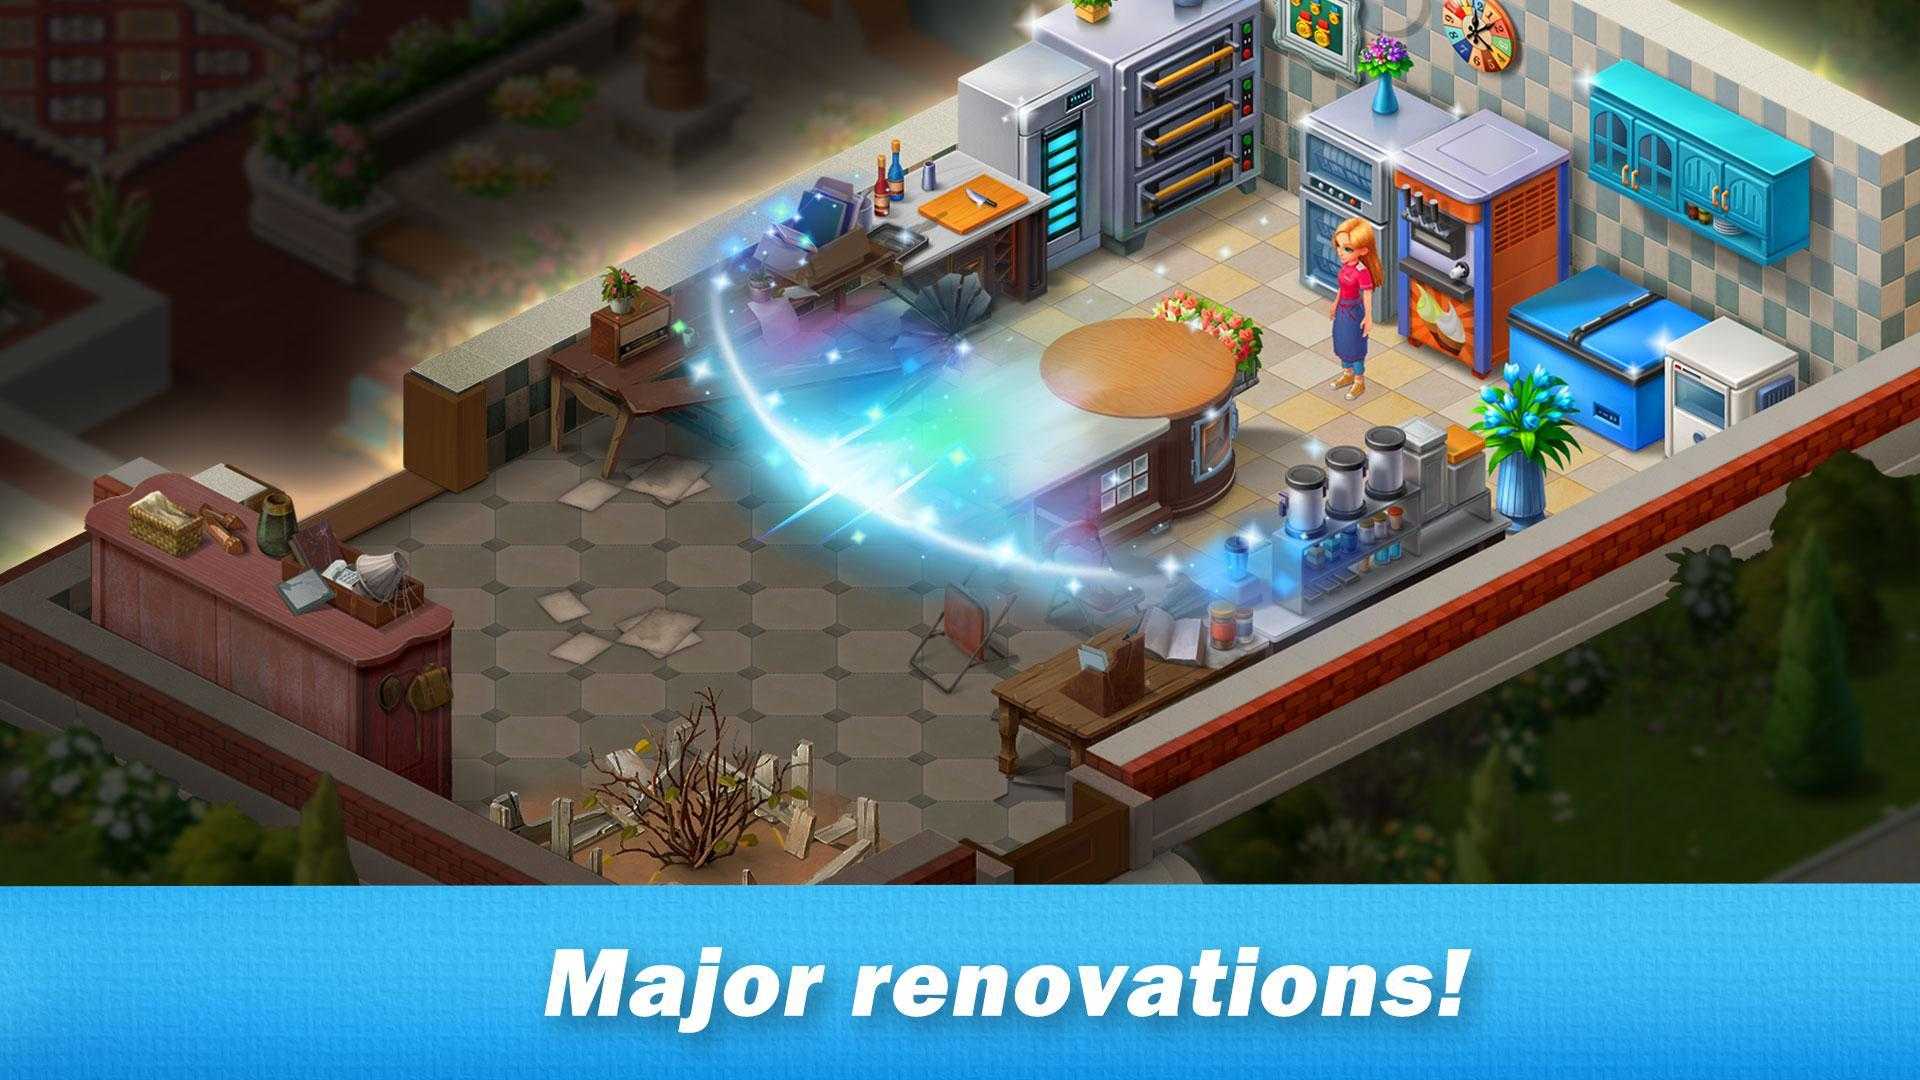 Restaurant Renovation v3.2.12 (Mod) Apk